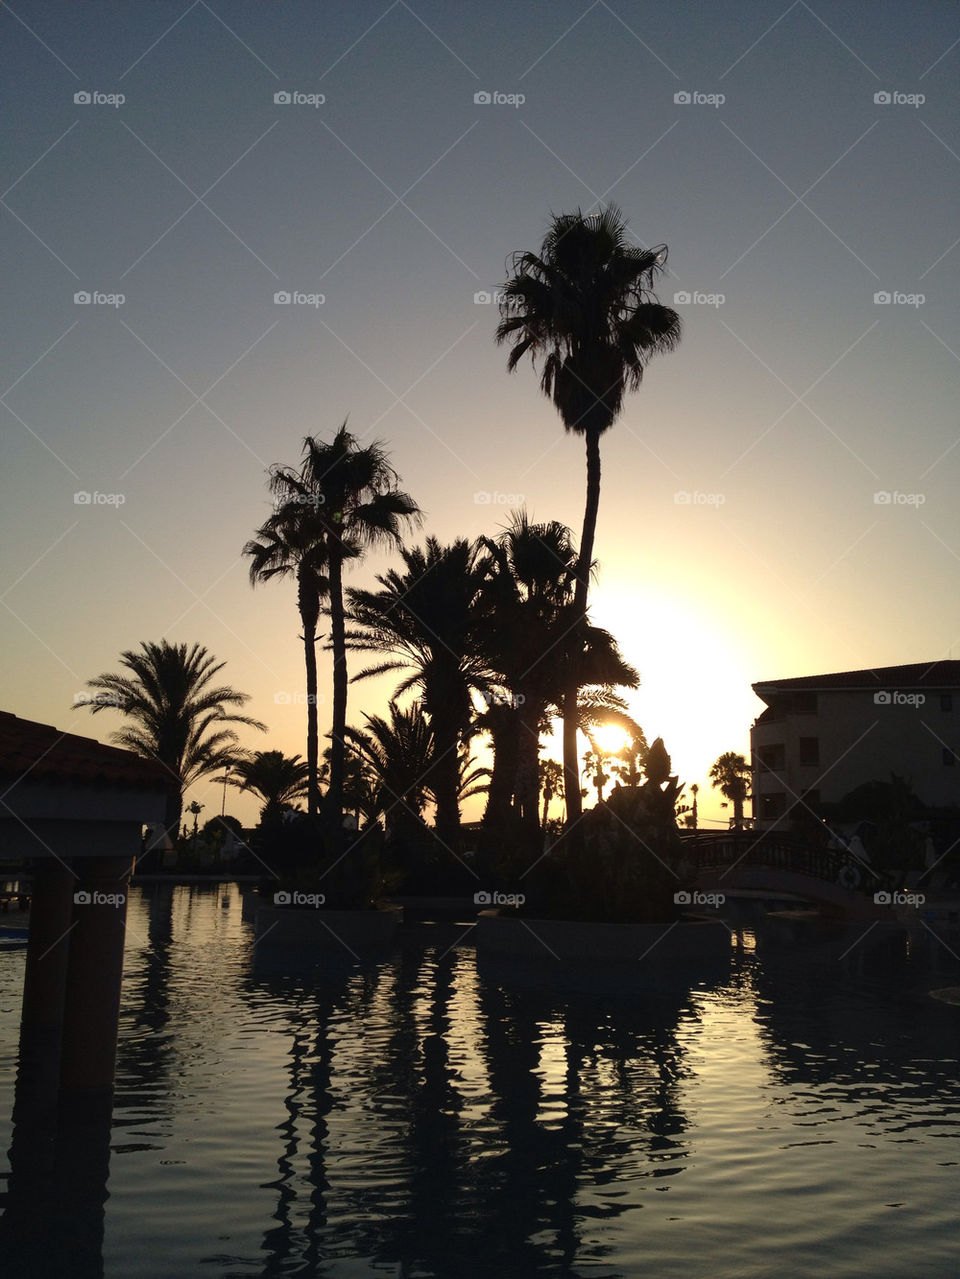 tree sunset palm hotel by gkallis23